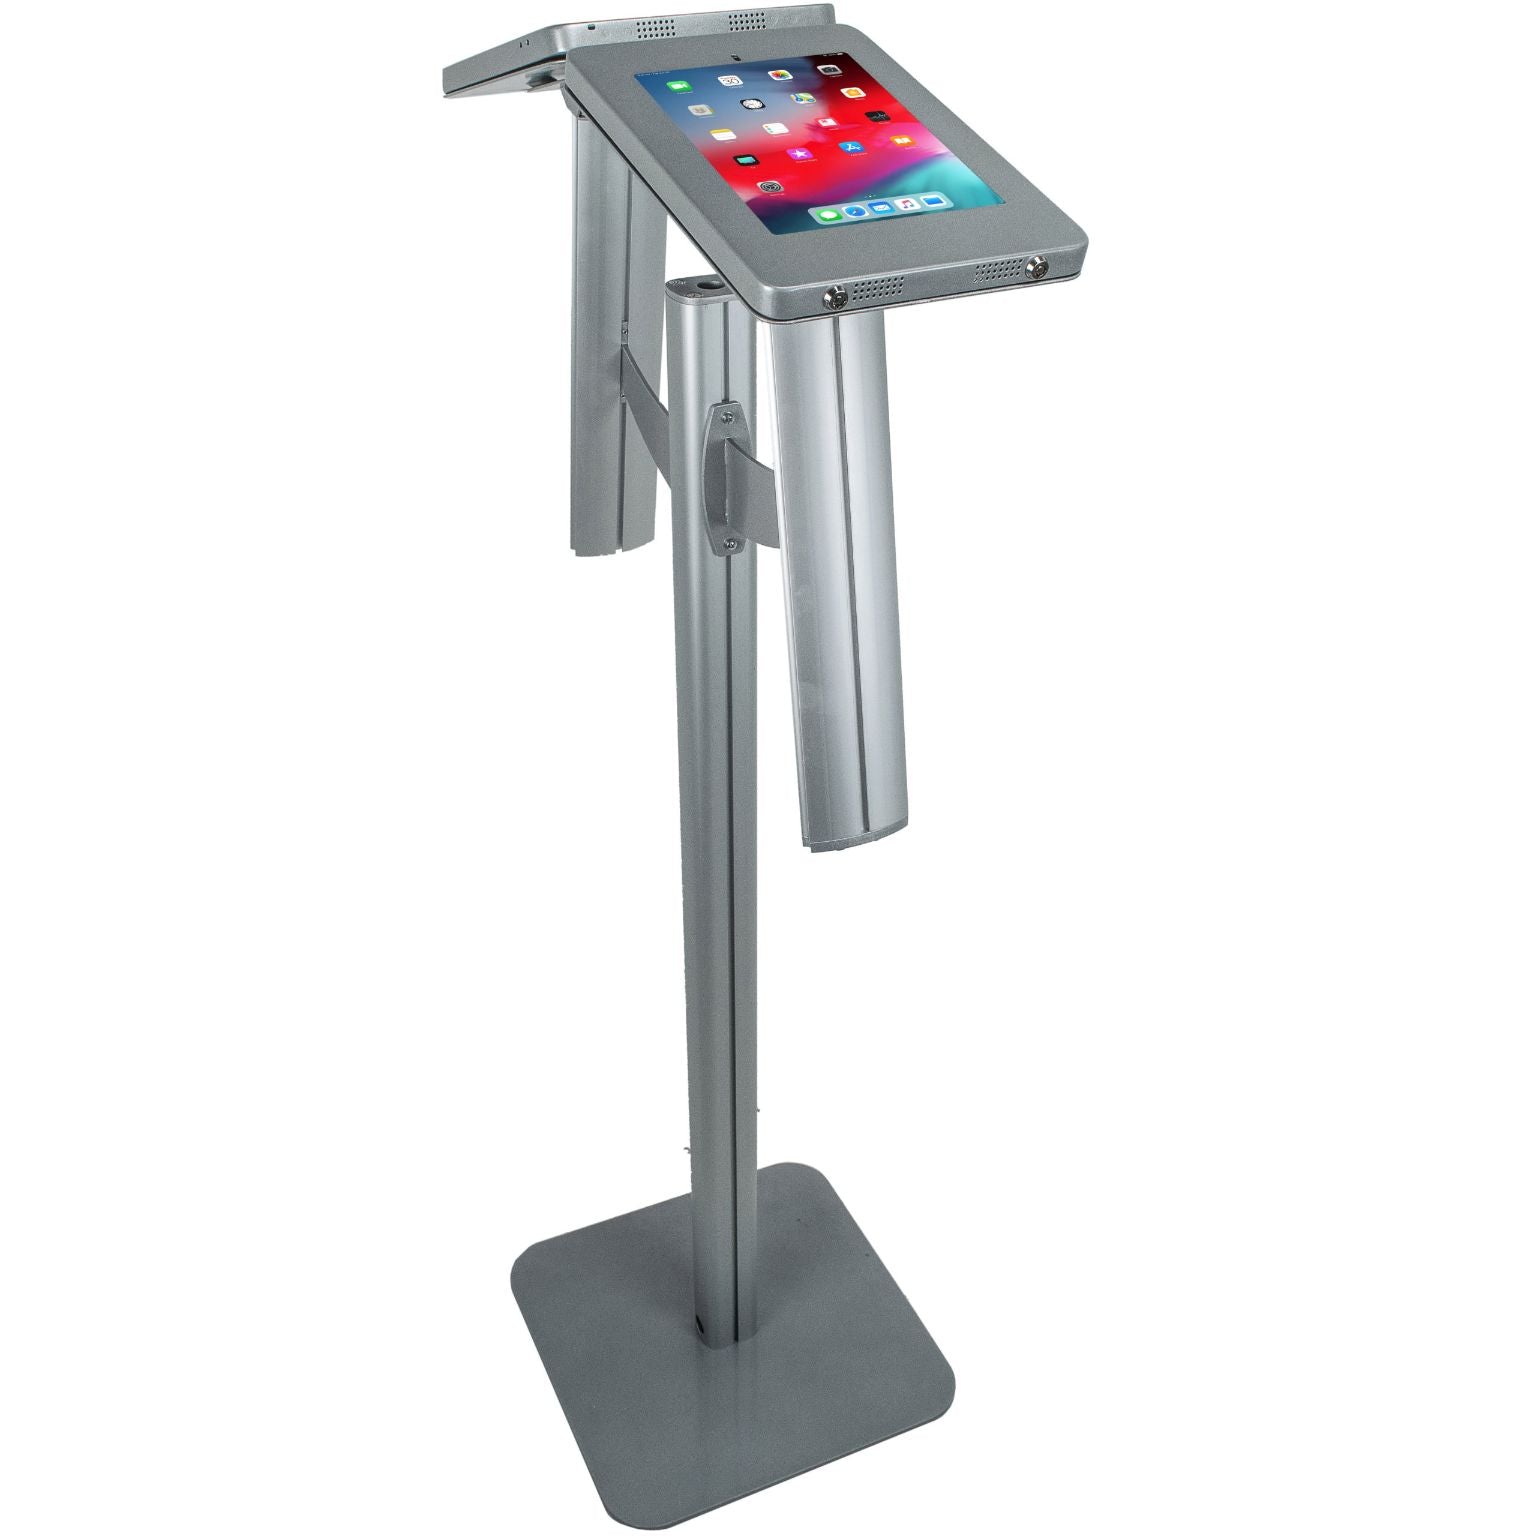 Twin Kiosk Security Floor Stand for iPad Gen. 5-6, iPad Pro 9.7, and iPad Air Gen. 1-2